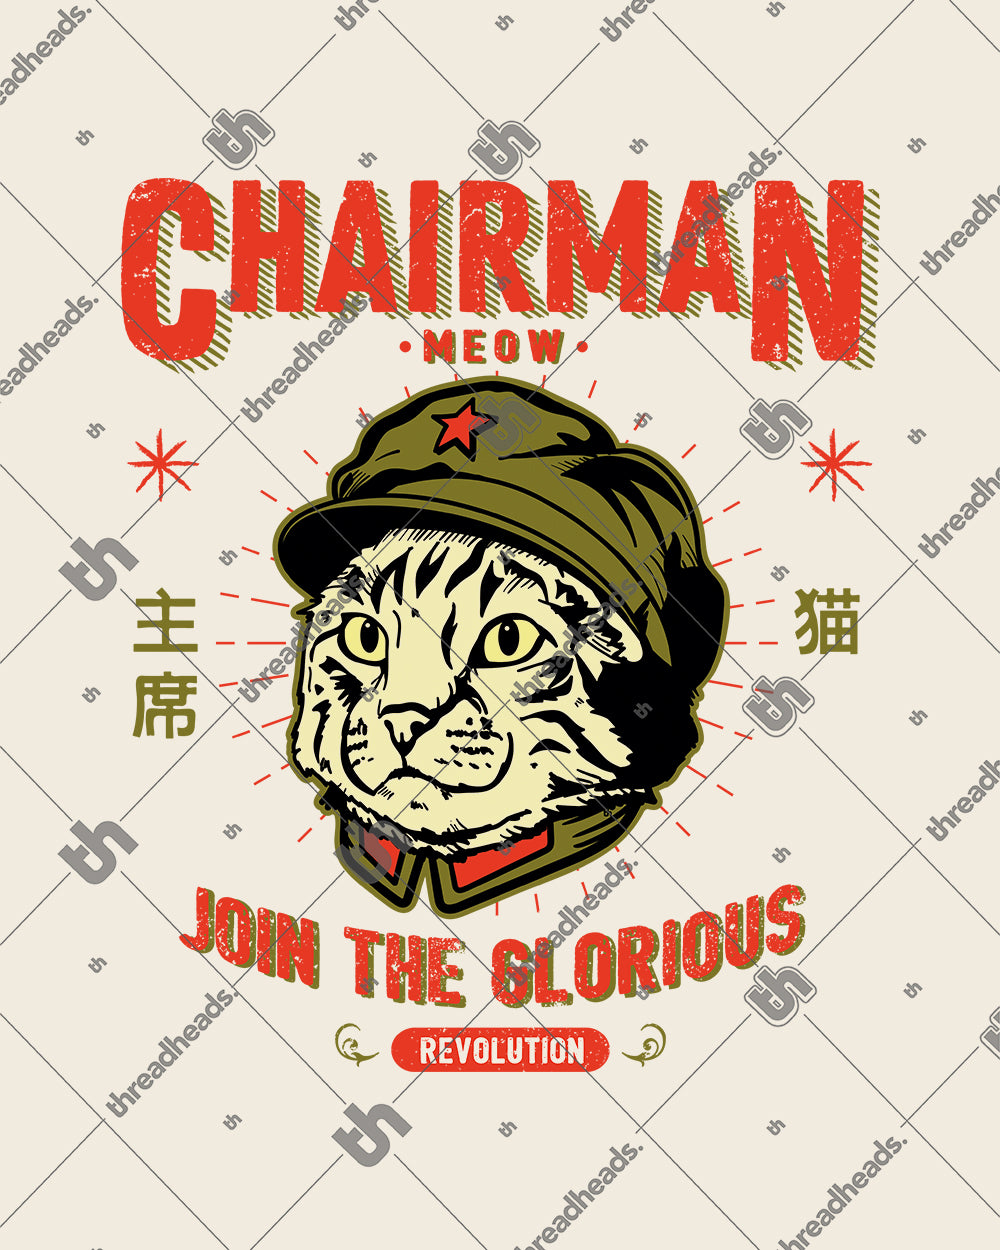 Chairman Meow T-Shirt Australia Online #colour_natural